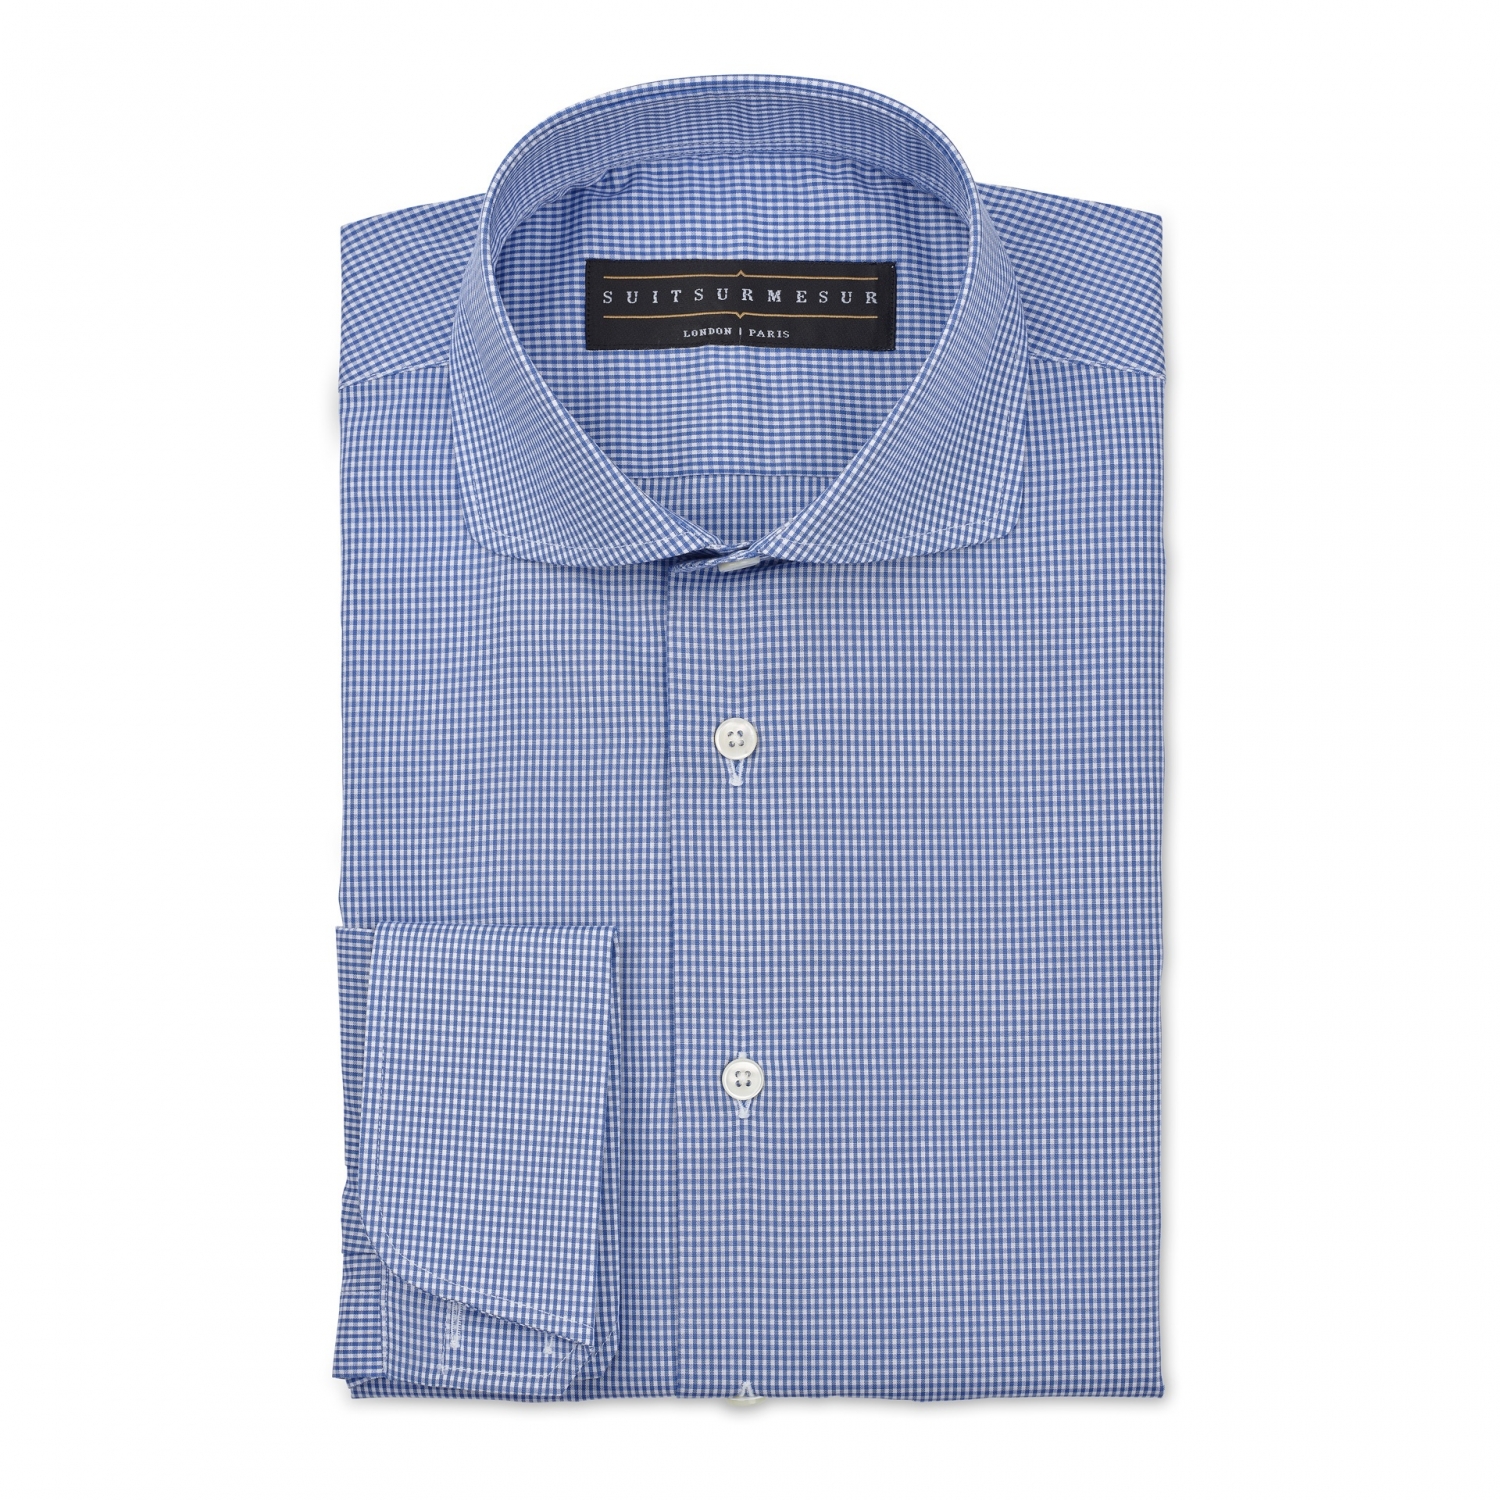  Micro-check (round Italian collar) shirt – 100% cotton #Canclini fabric